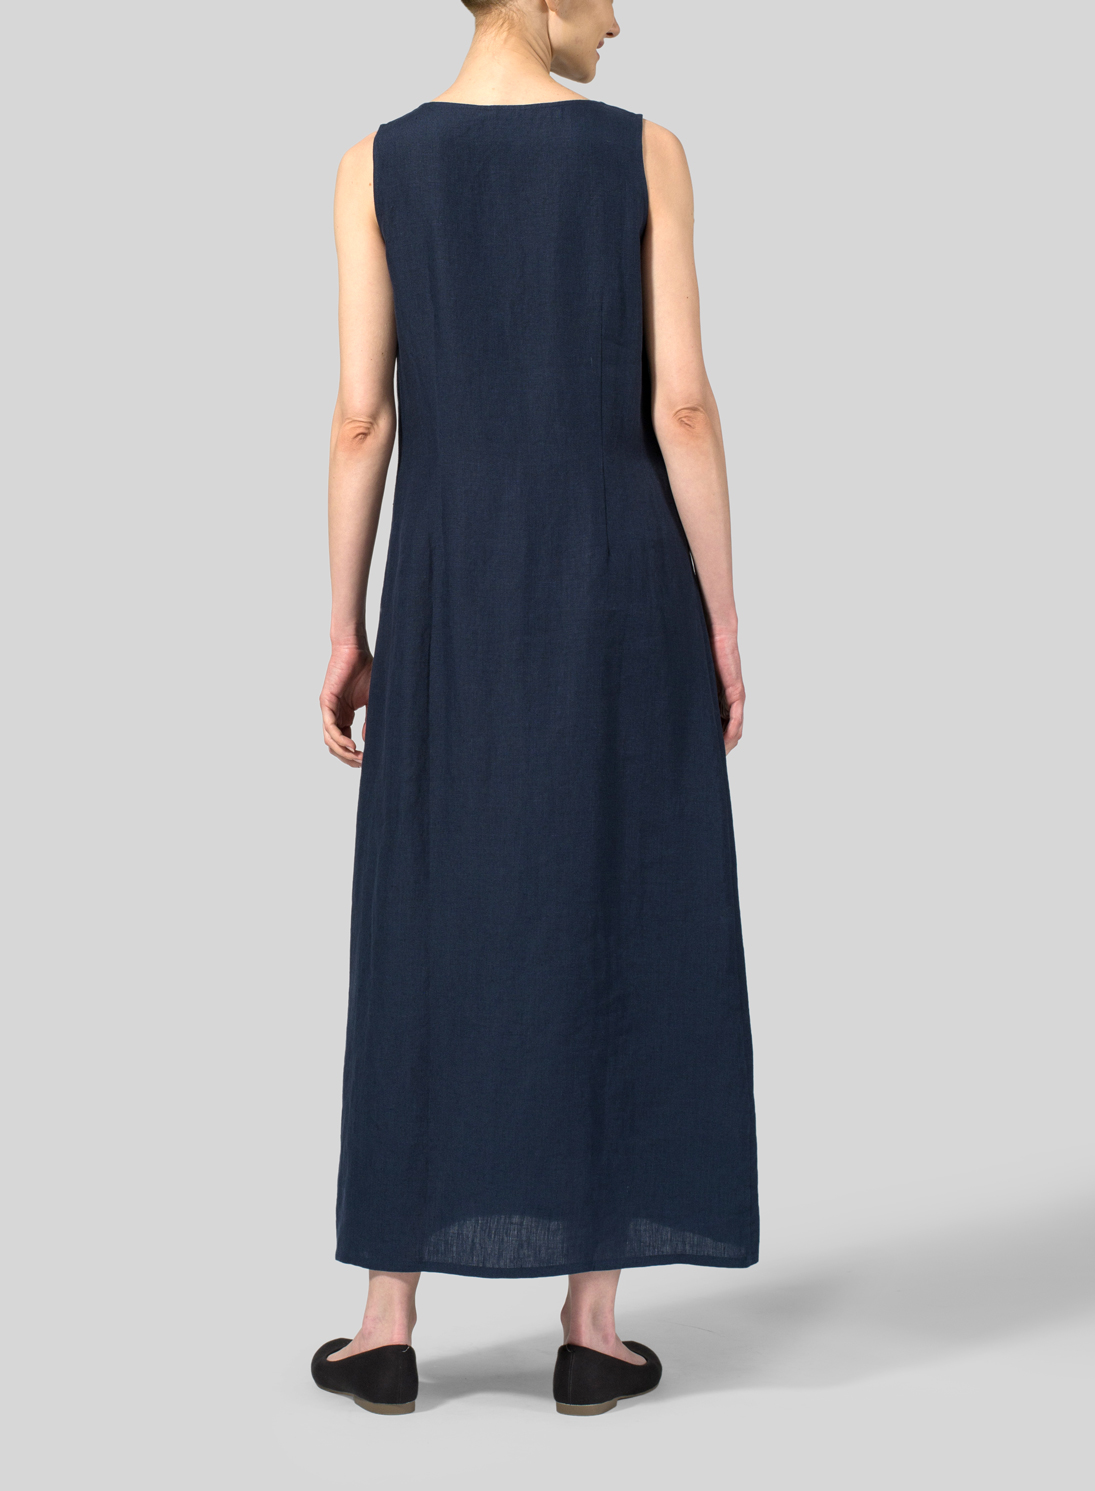 Linen Scoop Neck Sleeveless Long Dress - Plus Size